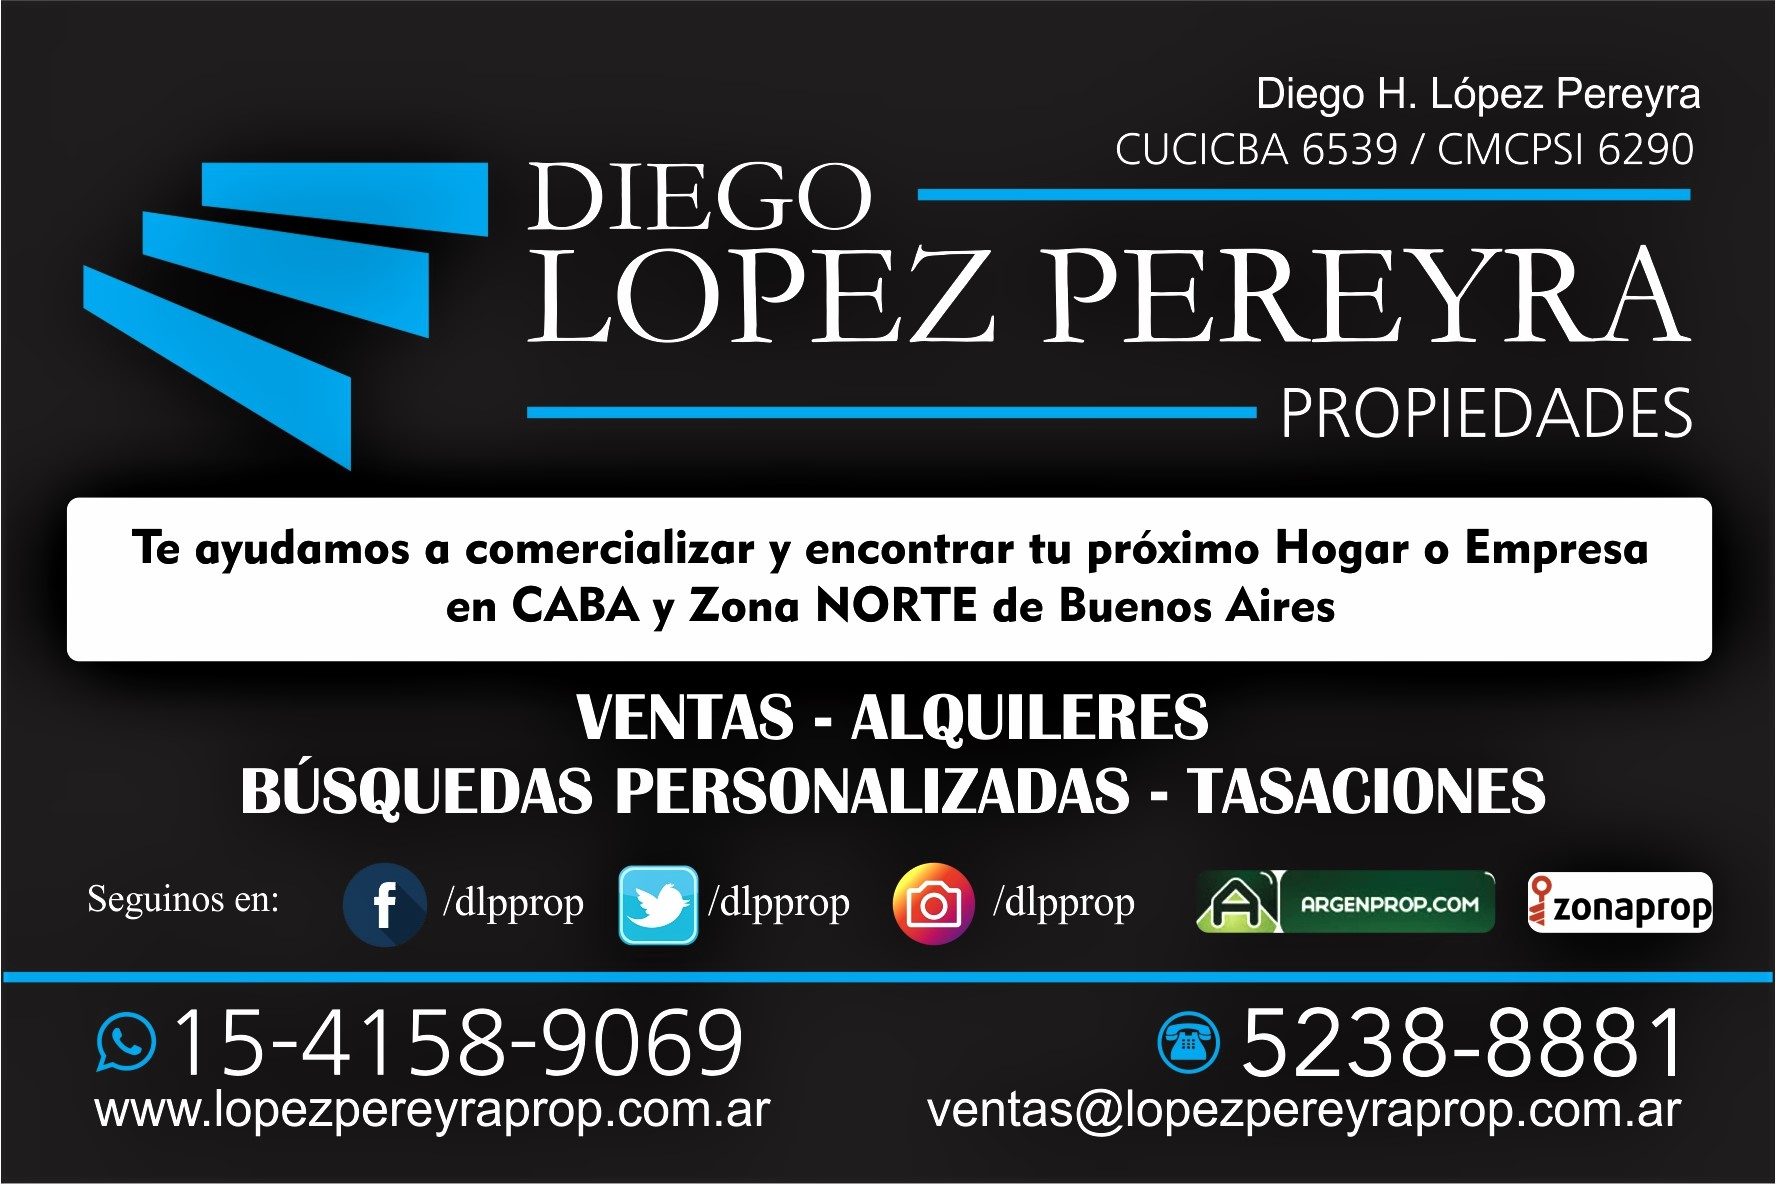 Diego López Pereyra Propiedades